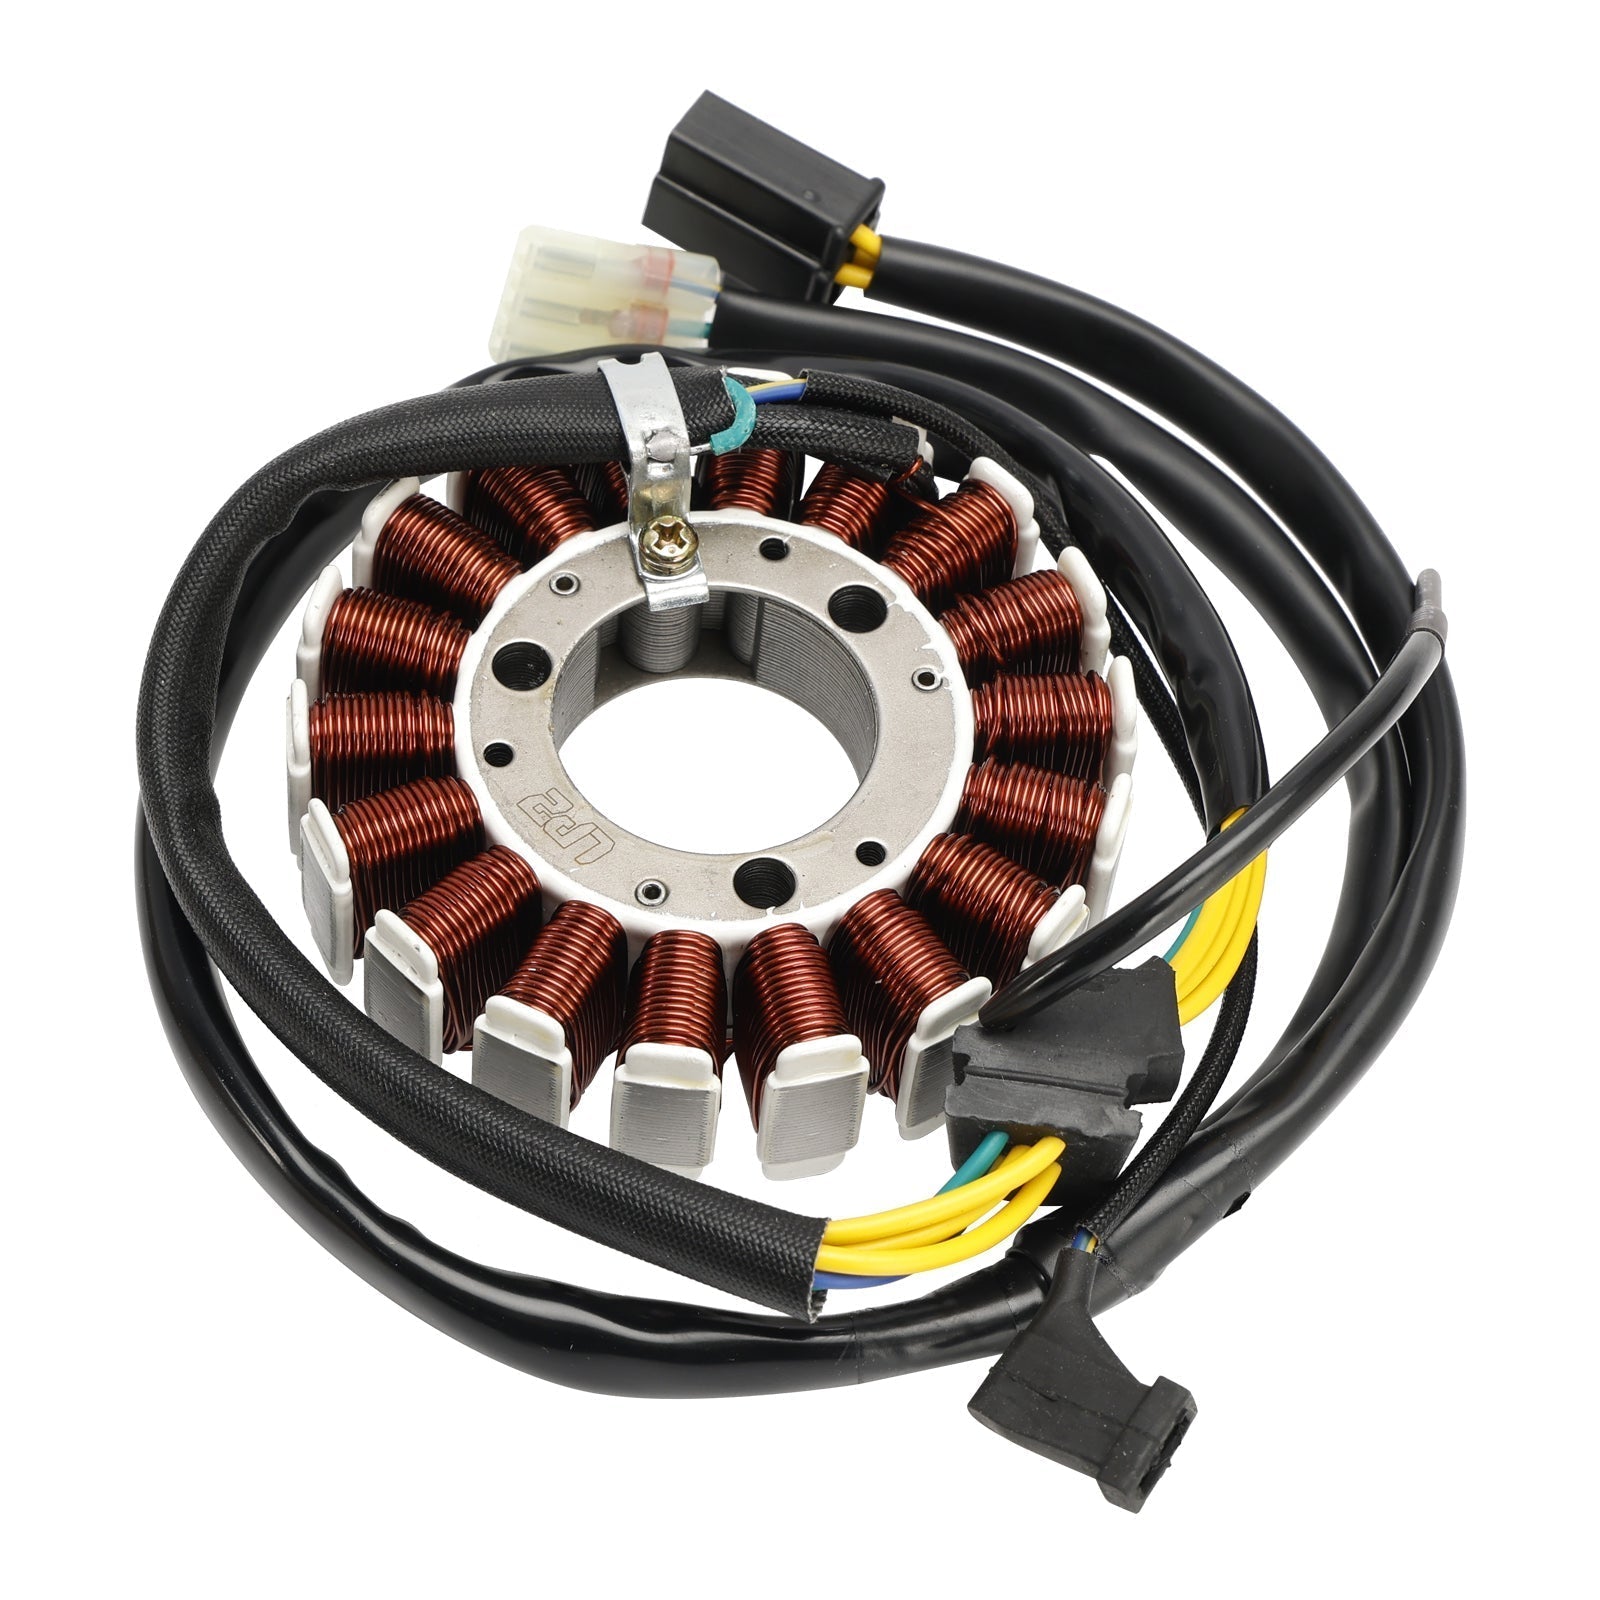 Stator de bobine magnétique Honda XR230 Motard 2008 + régulateur de tension + joint Assy 31120-KFB-841